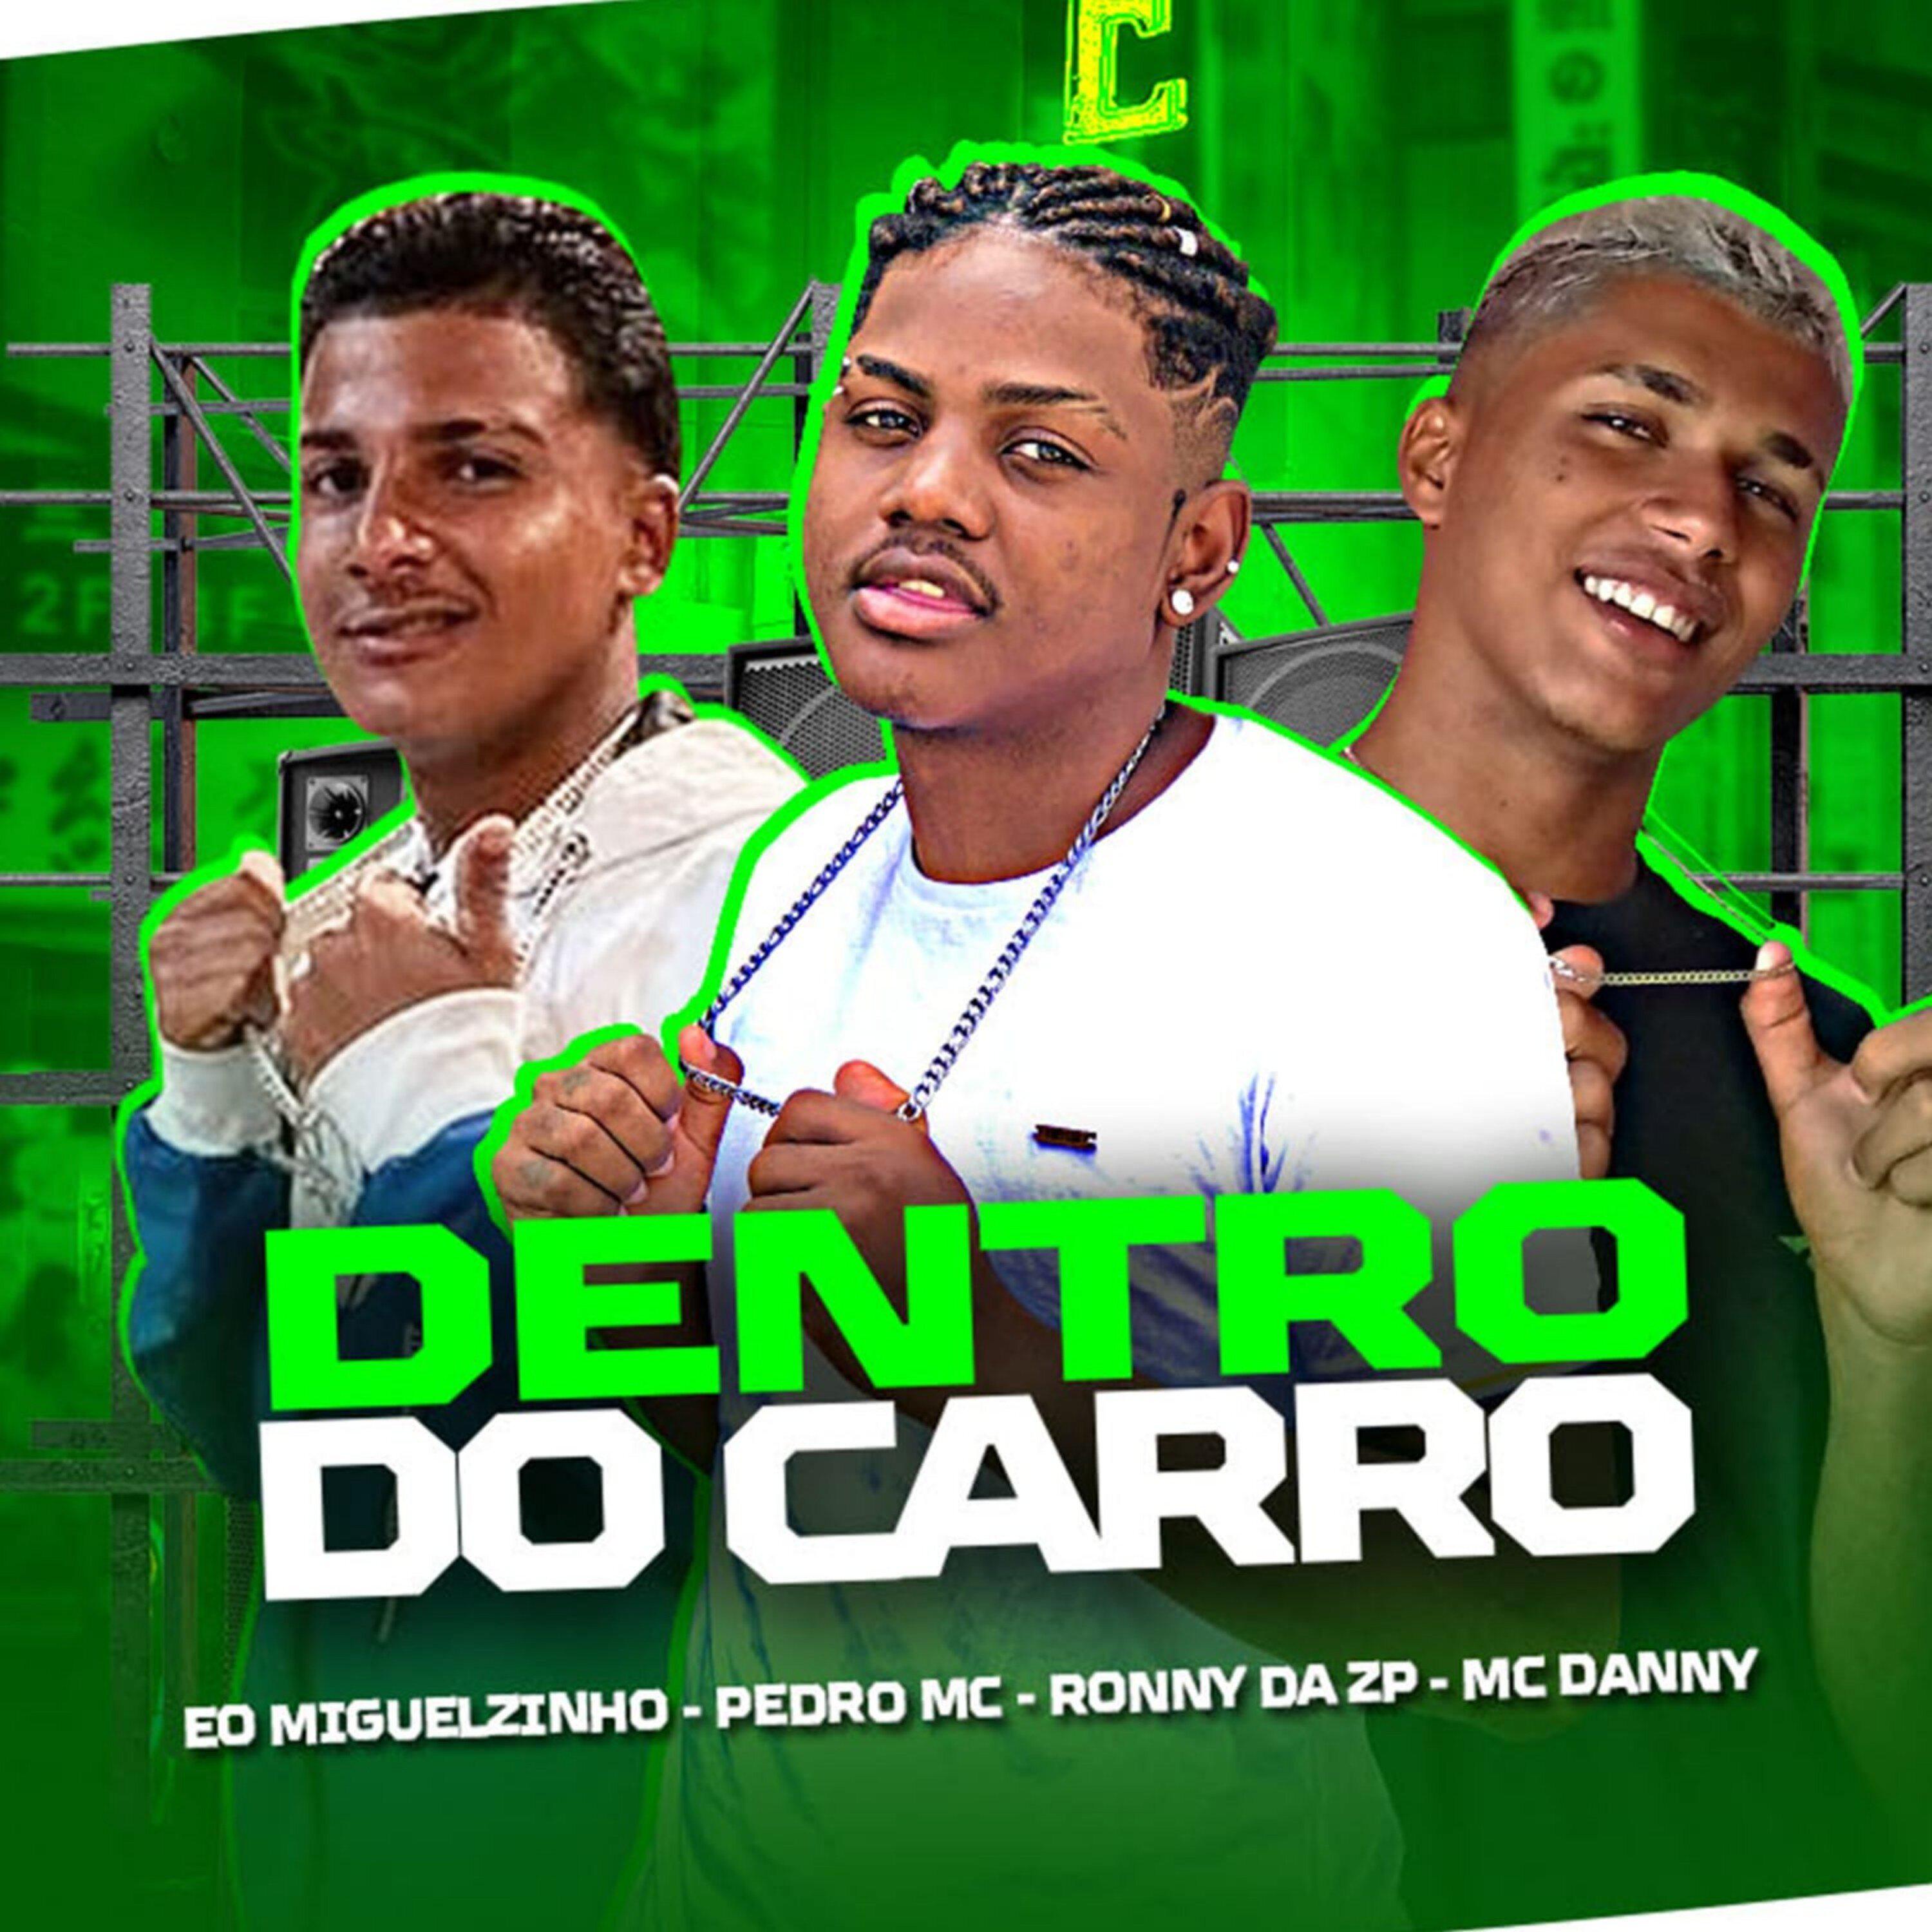 Ronny da ZP - Dentro do Carro (feat. Eo Miguelzinho, Mc Danny & Pedro Mc)